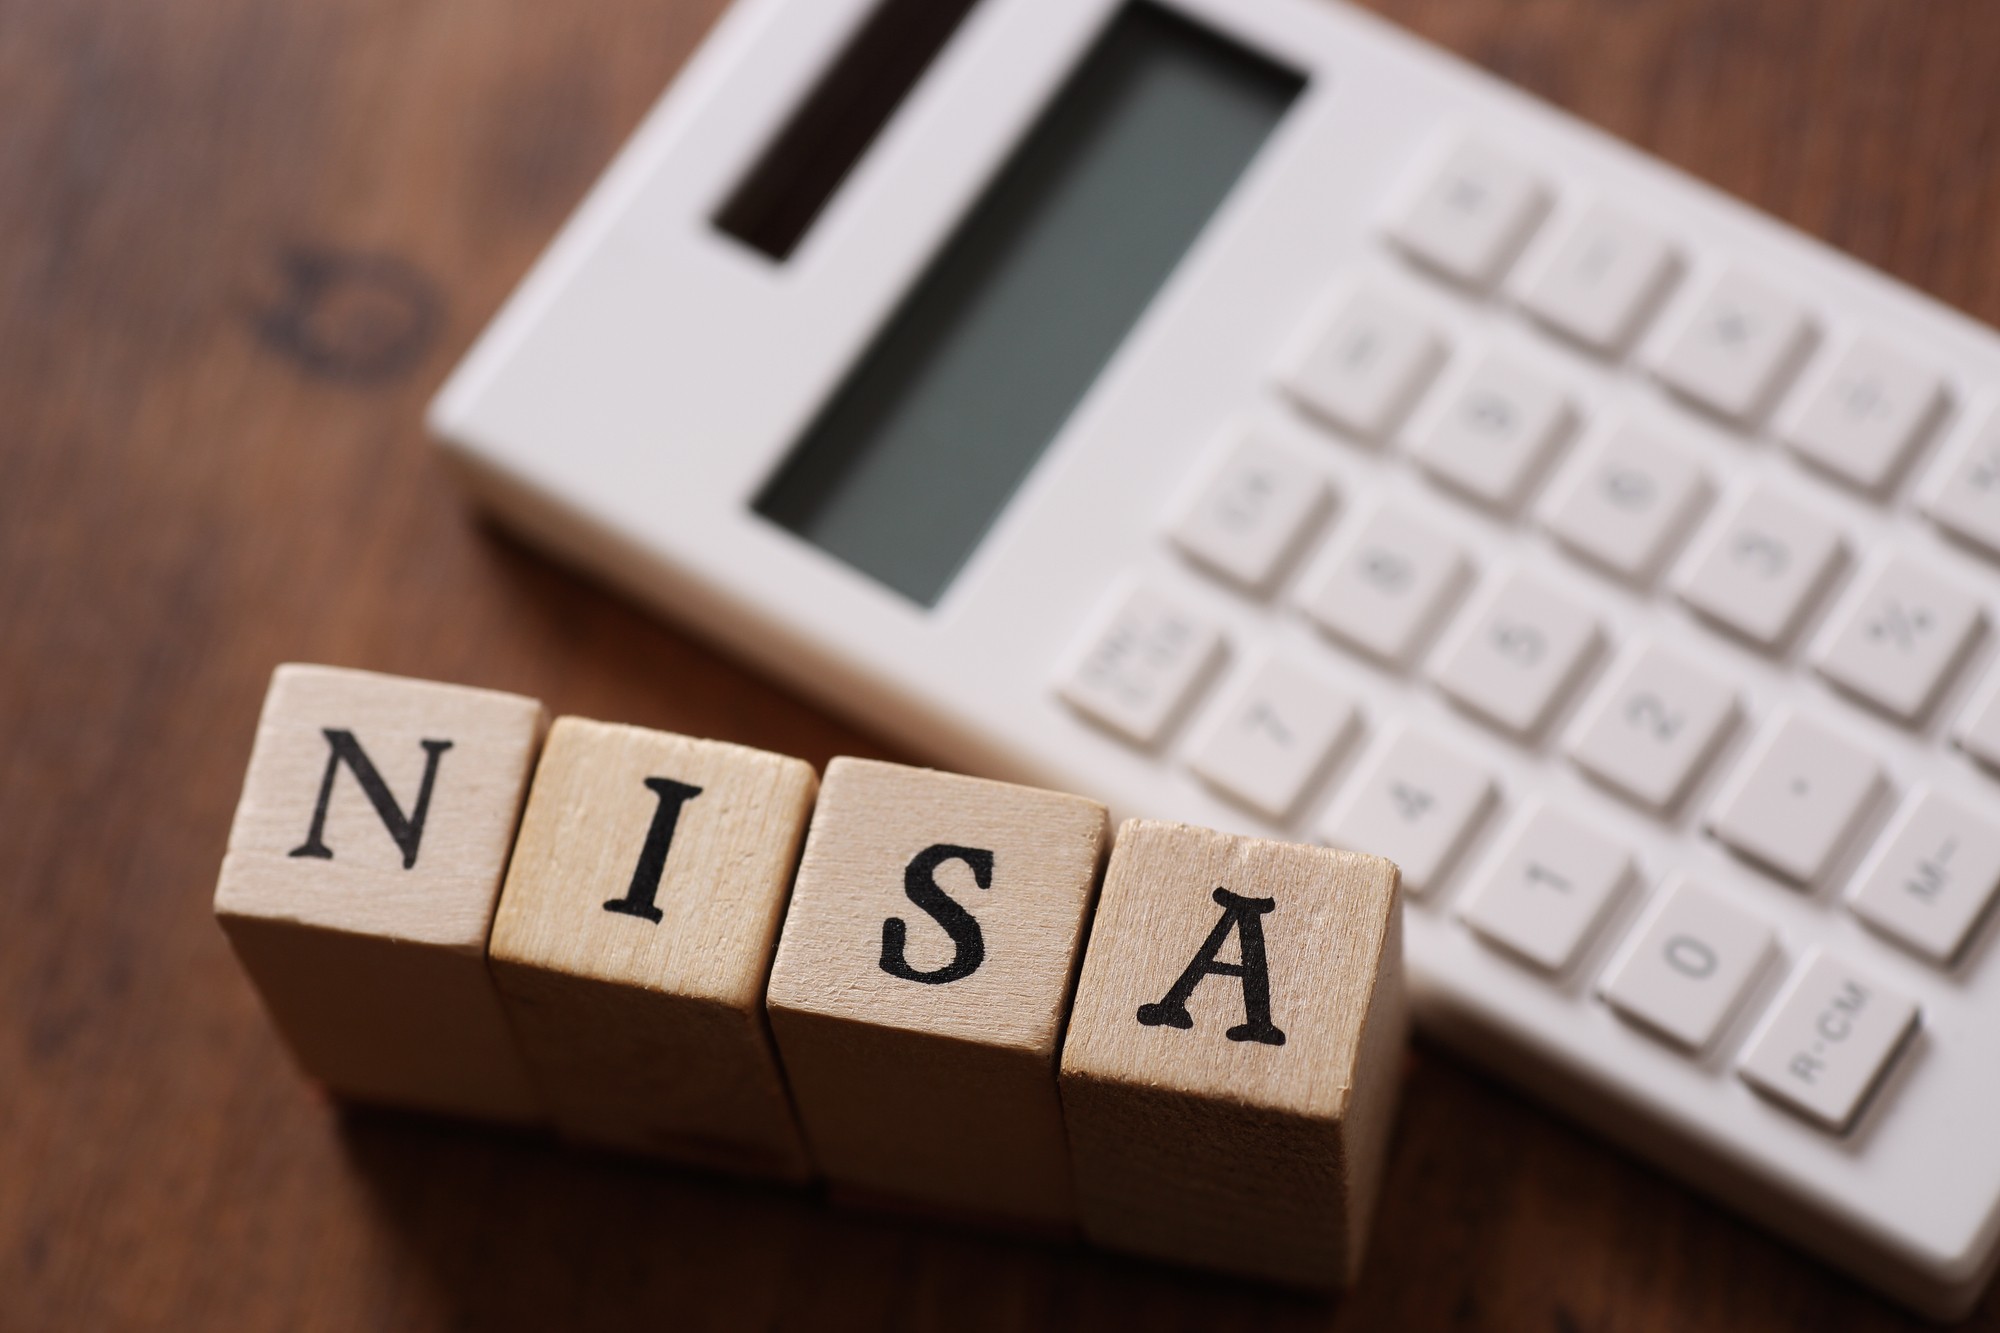 NISAの文字と電卓